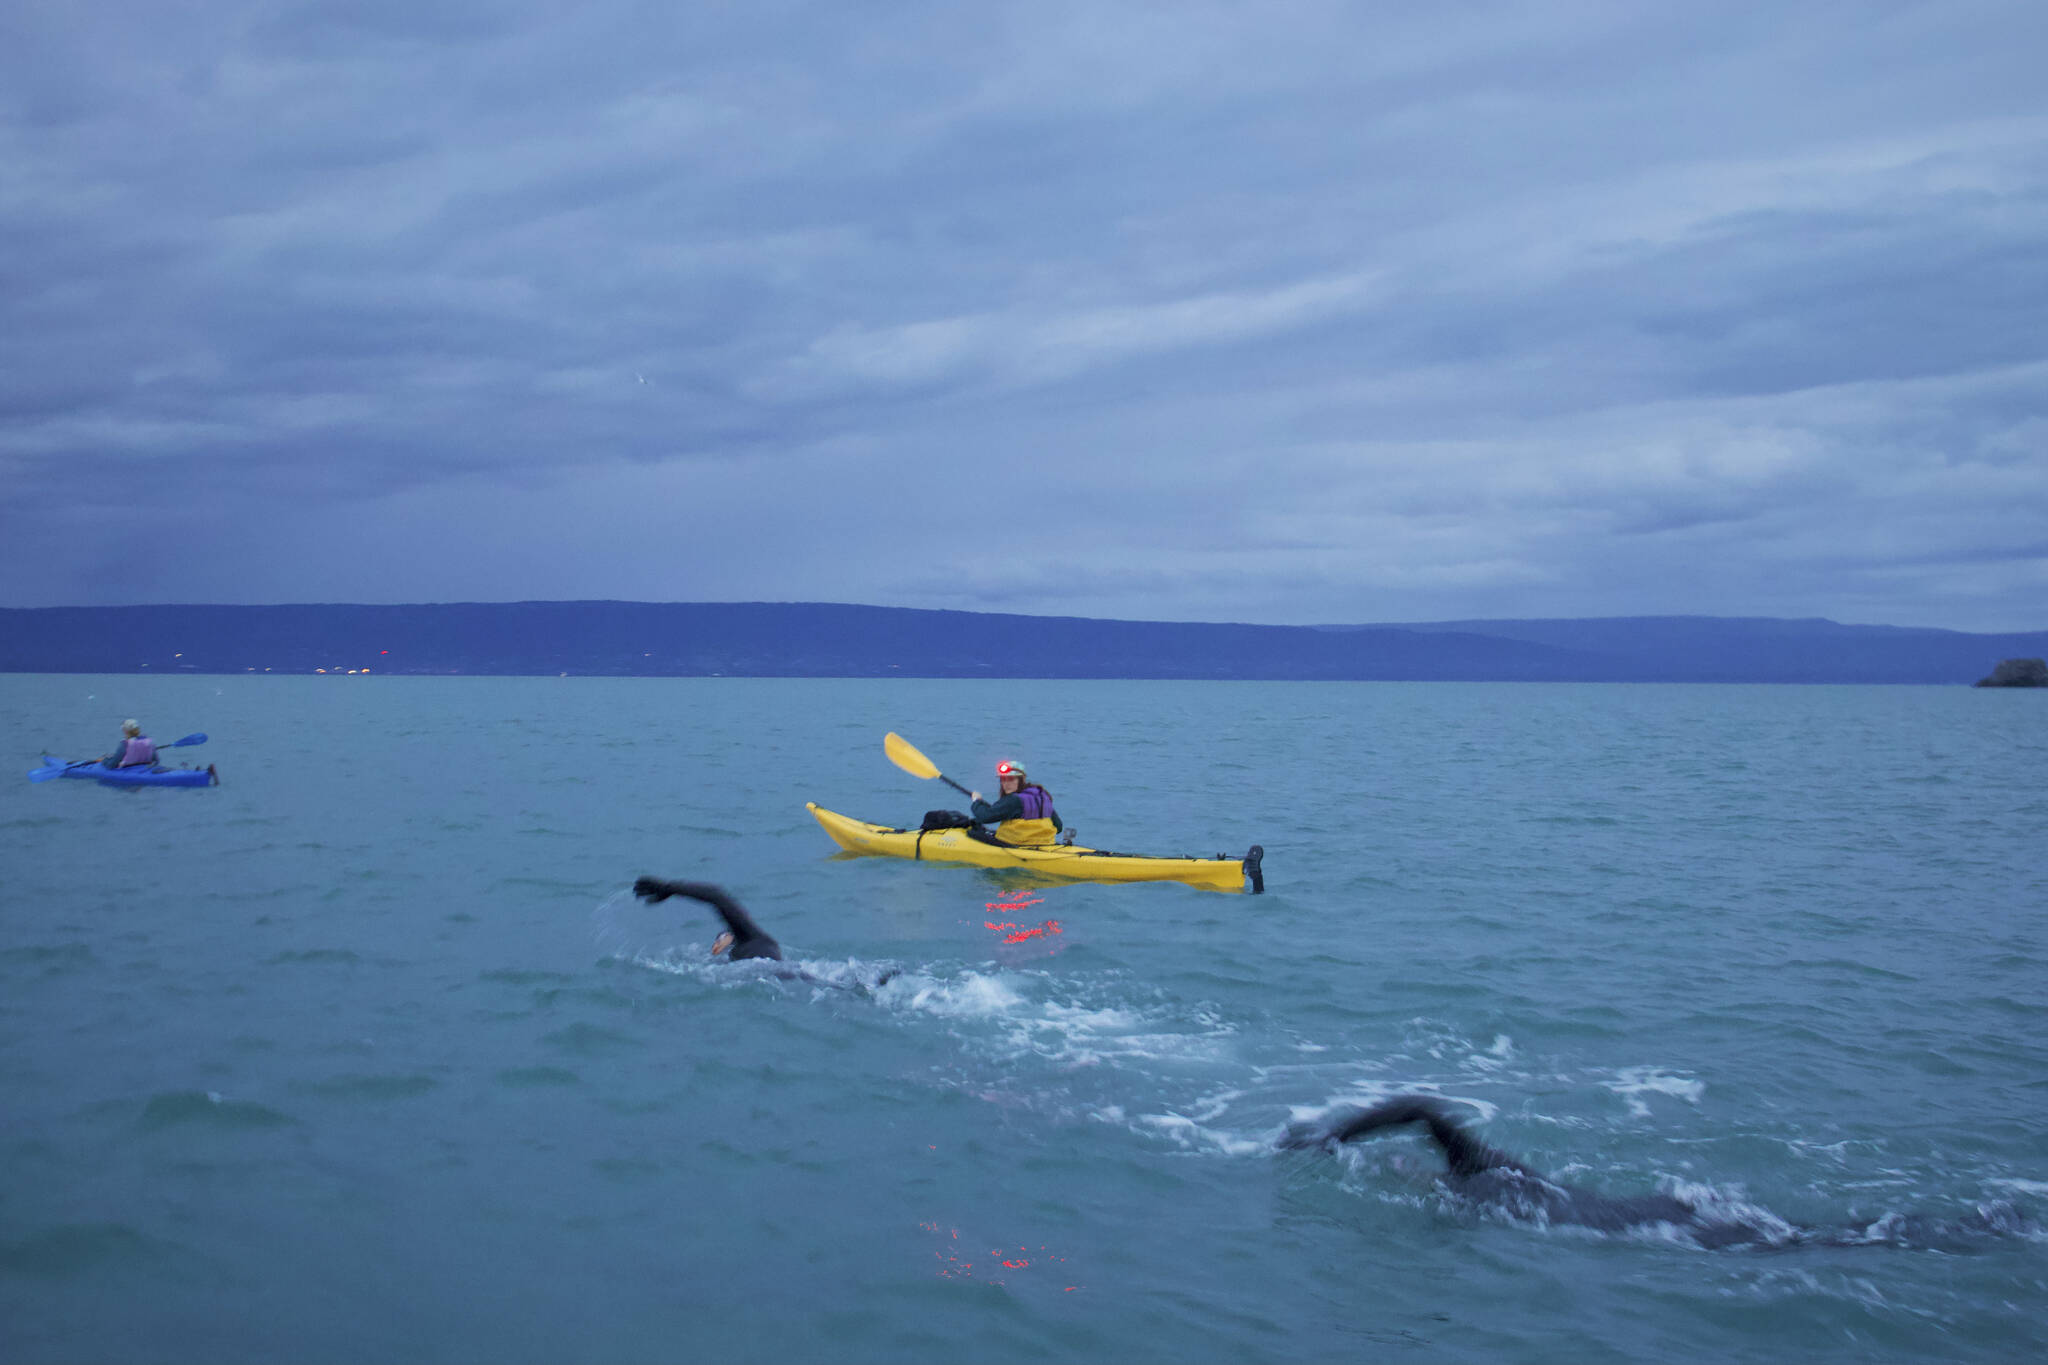 Skyler Rodriquez, left, and Leif Restad, right, swim across Kachemak Bay near Homer, Alaska, on Thursday, Aug. 18, 2022. Kayakers Brita Restad, left, and Autumn Daigle, right, helped guide them. (Photo by Ella Blanton Yourkowski)